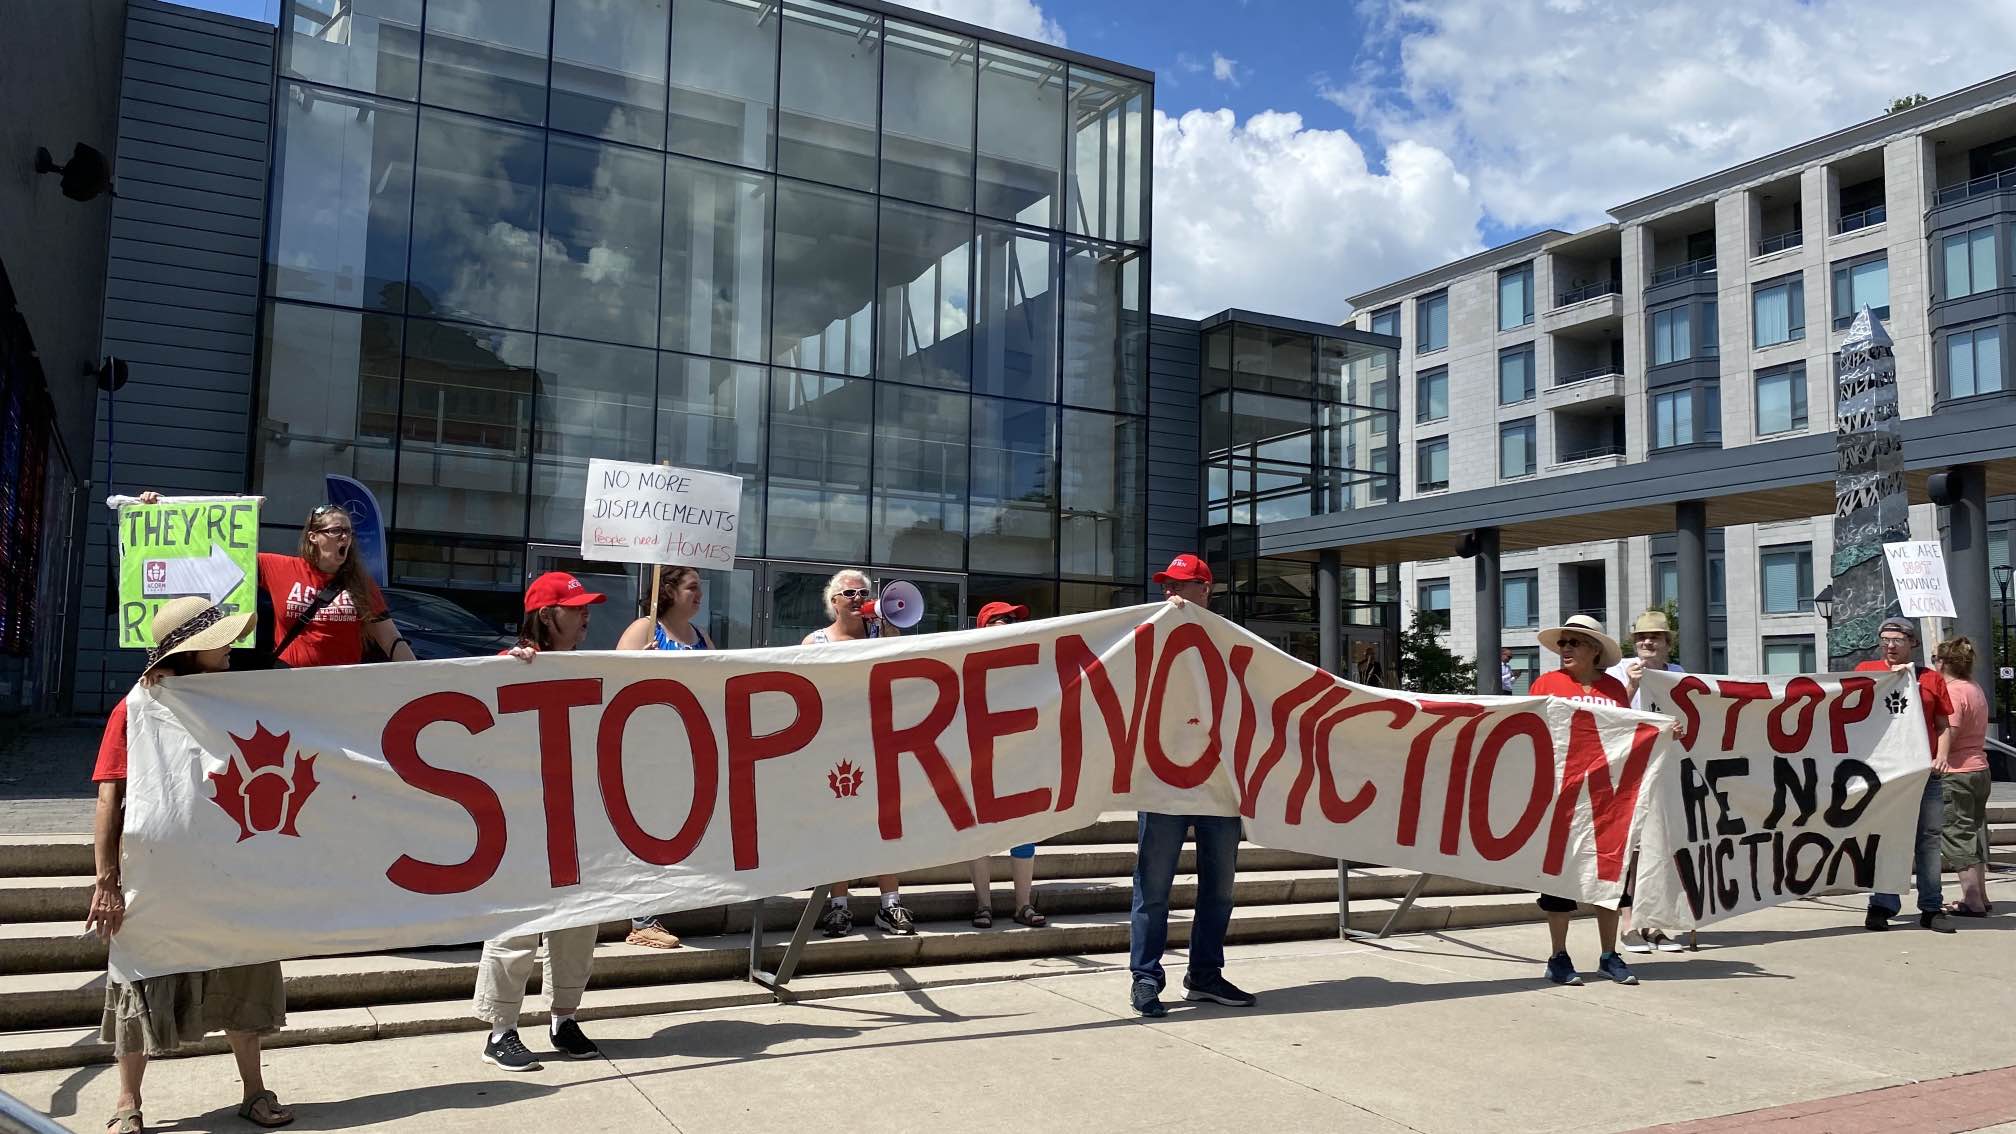 Hamilton-area rallies reflect pressure rising rents, renovictions are having on tenants